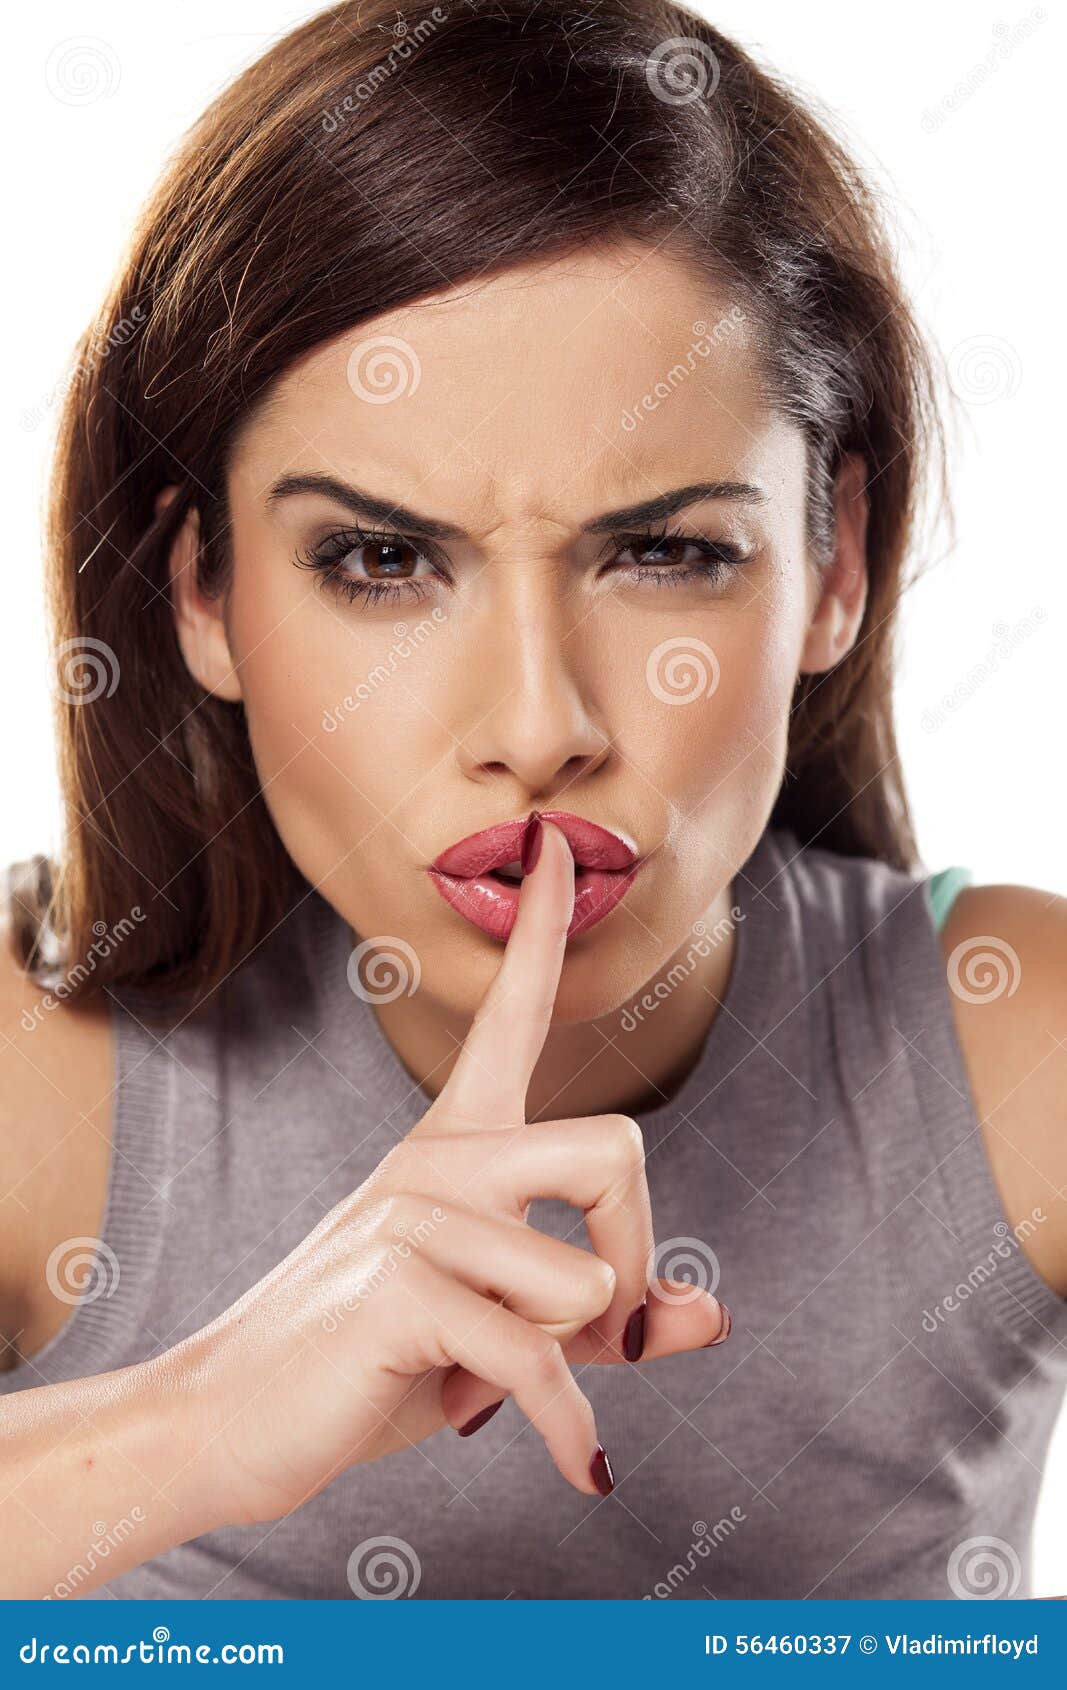 Секрет во рту. Девушка прислонила палец к губам. Палец во рту у девушки. Указательный палец у губ.